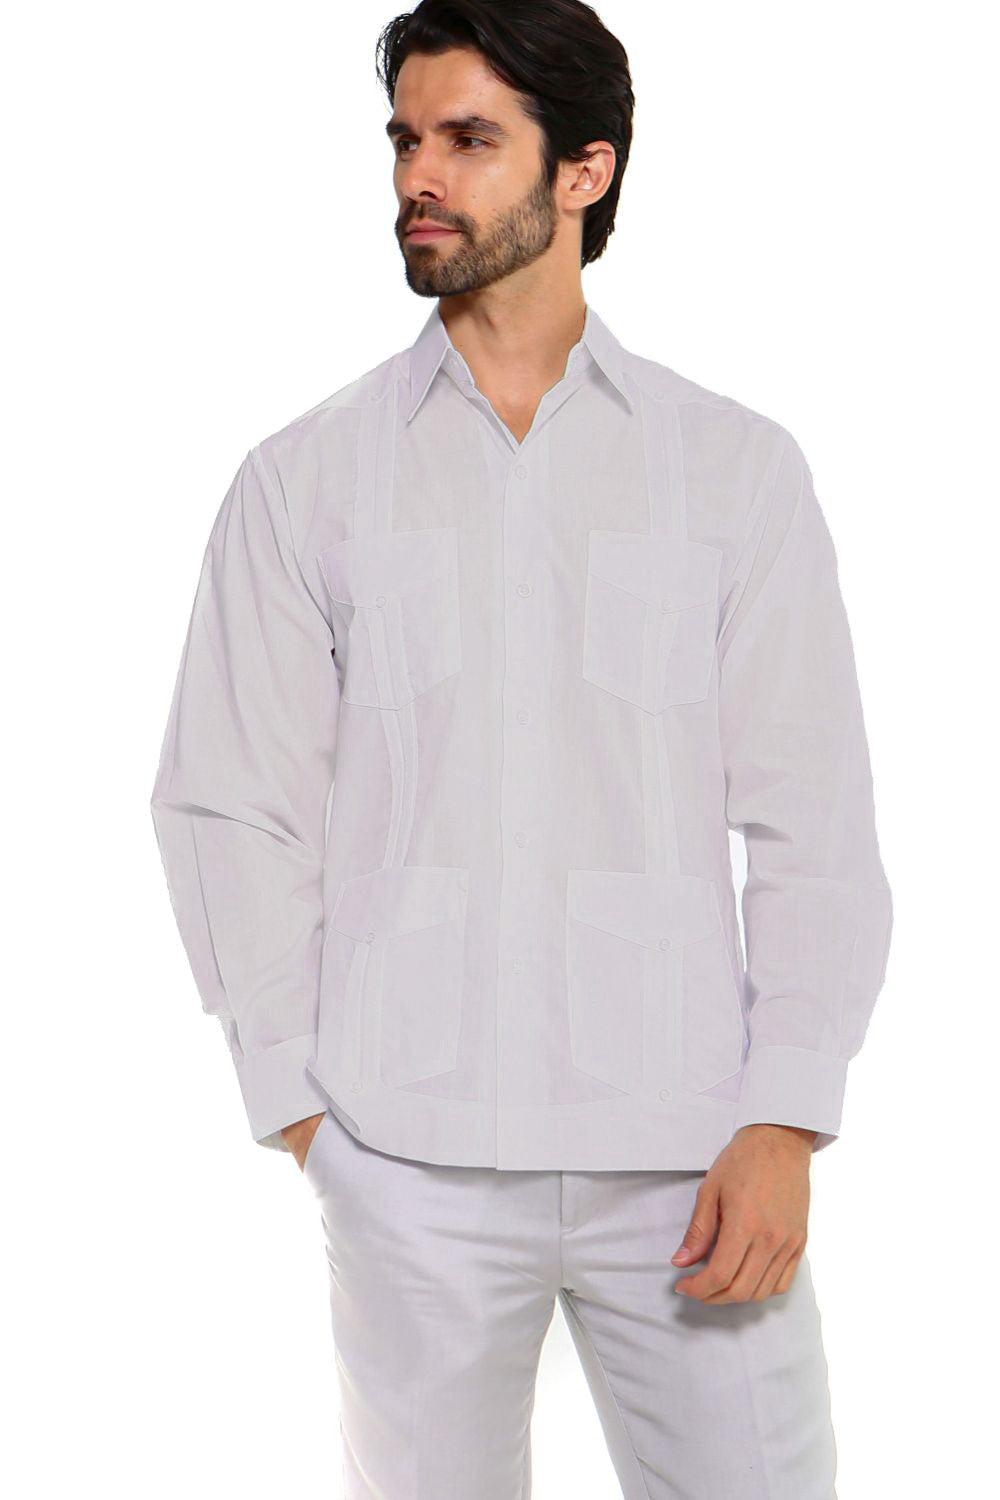 Mojito Collection Men's Guayabera Shirt Premium 100% Linen Long Sleeve - Mojito Collection - Chacabana, Guayabera, Linen Guayabera, Long Sleeve Shirt, Mens Shirt, Mojito Guayabera Shirt, Moji